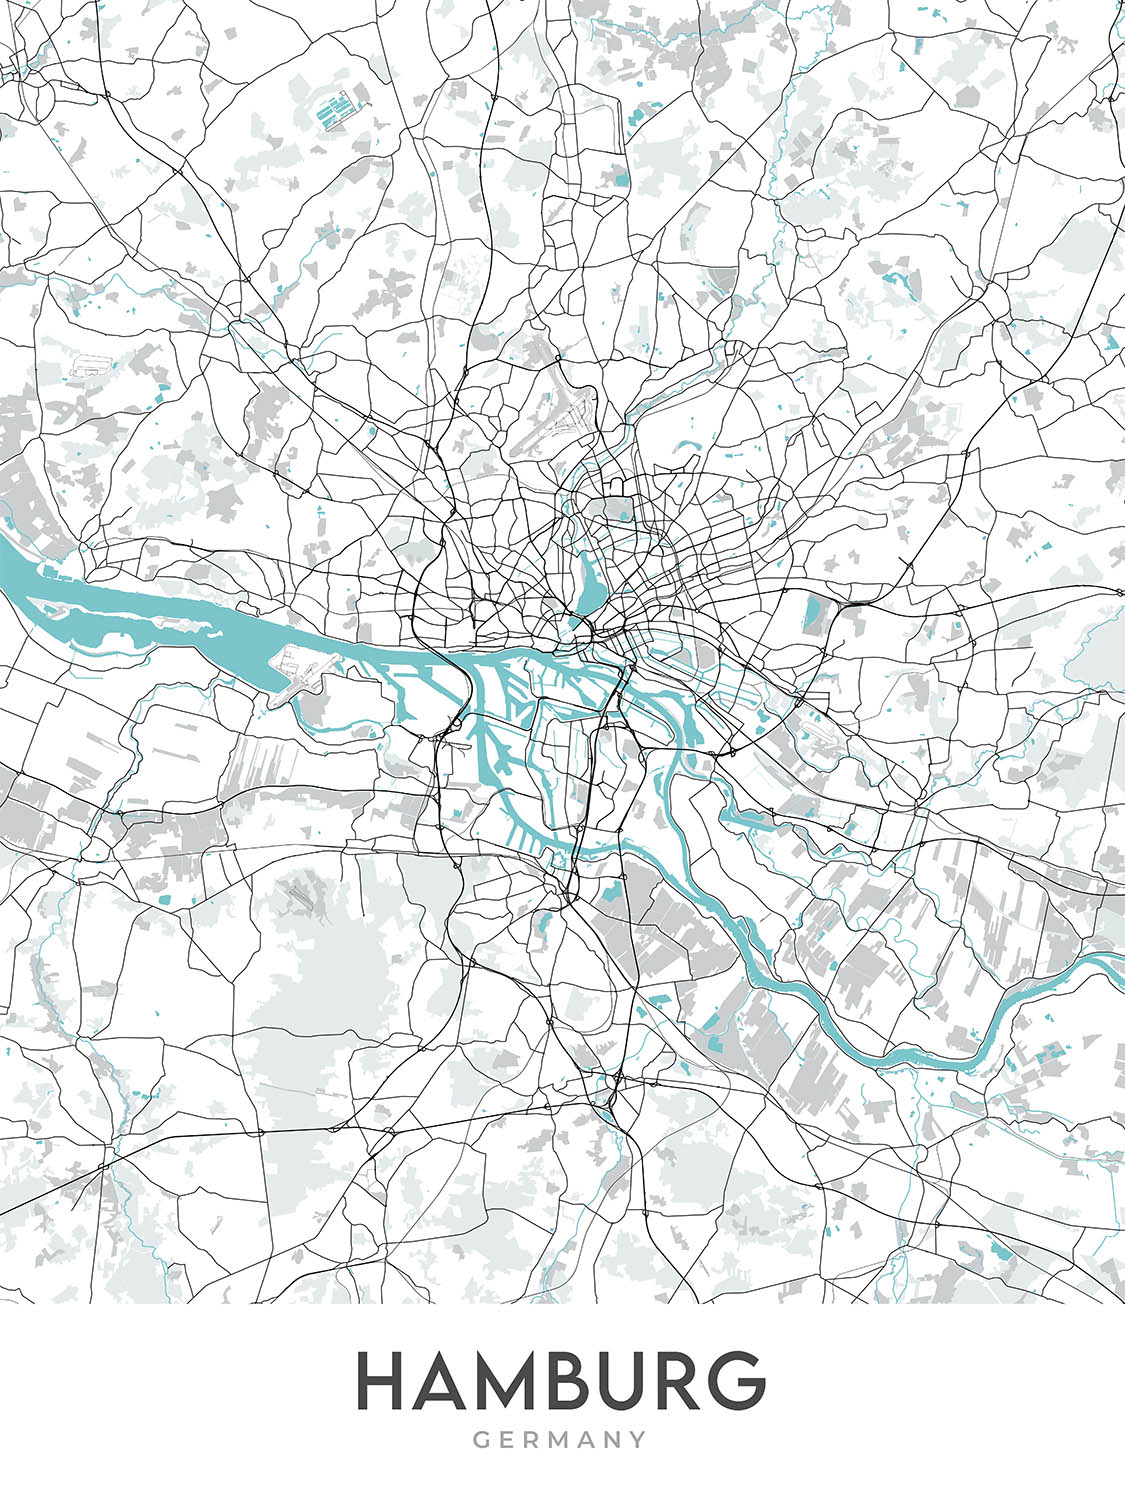 Modern City Map of Hamburg, Germany: Altstadt, St. Pauli, Elbphilharmonie, Reeperbahn, Planten un Blomen